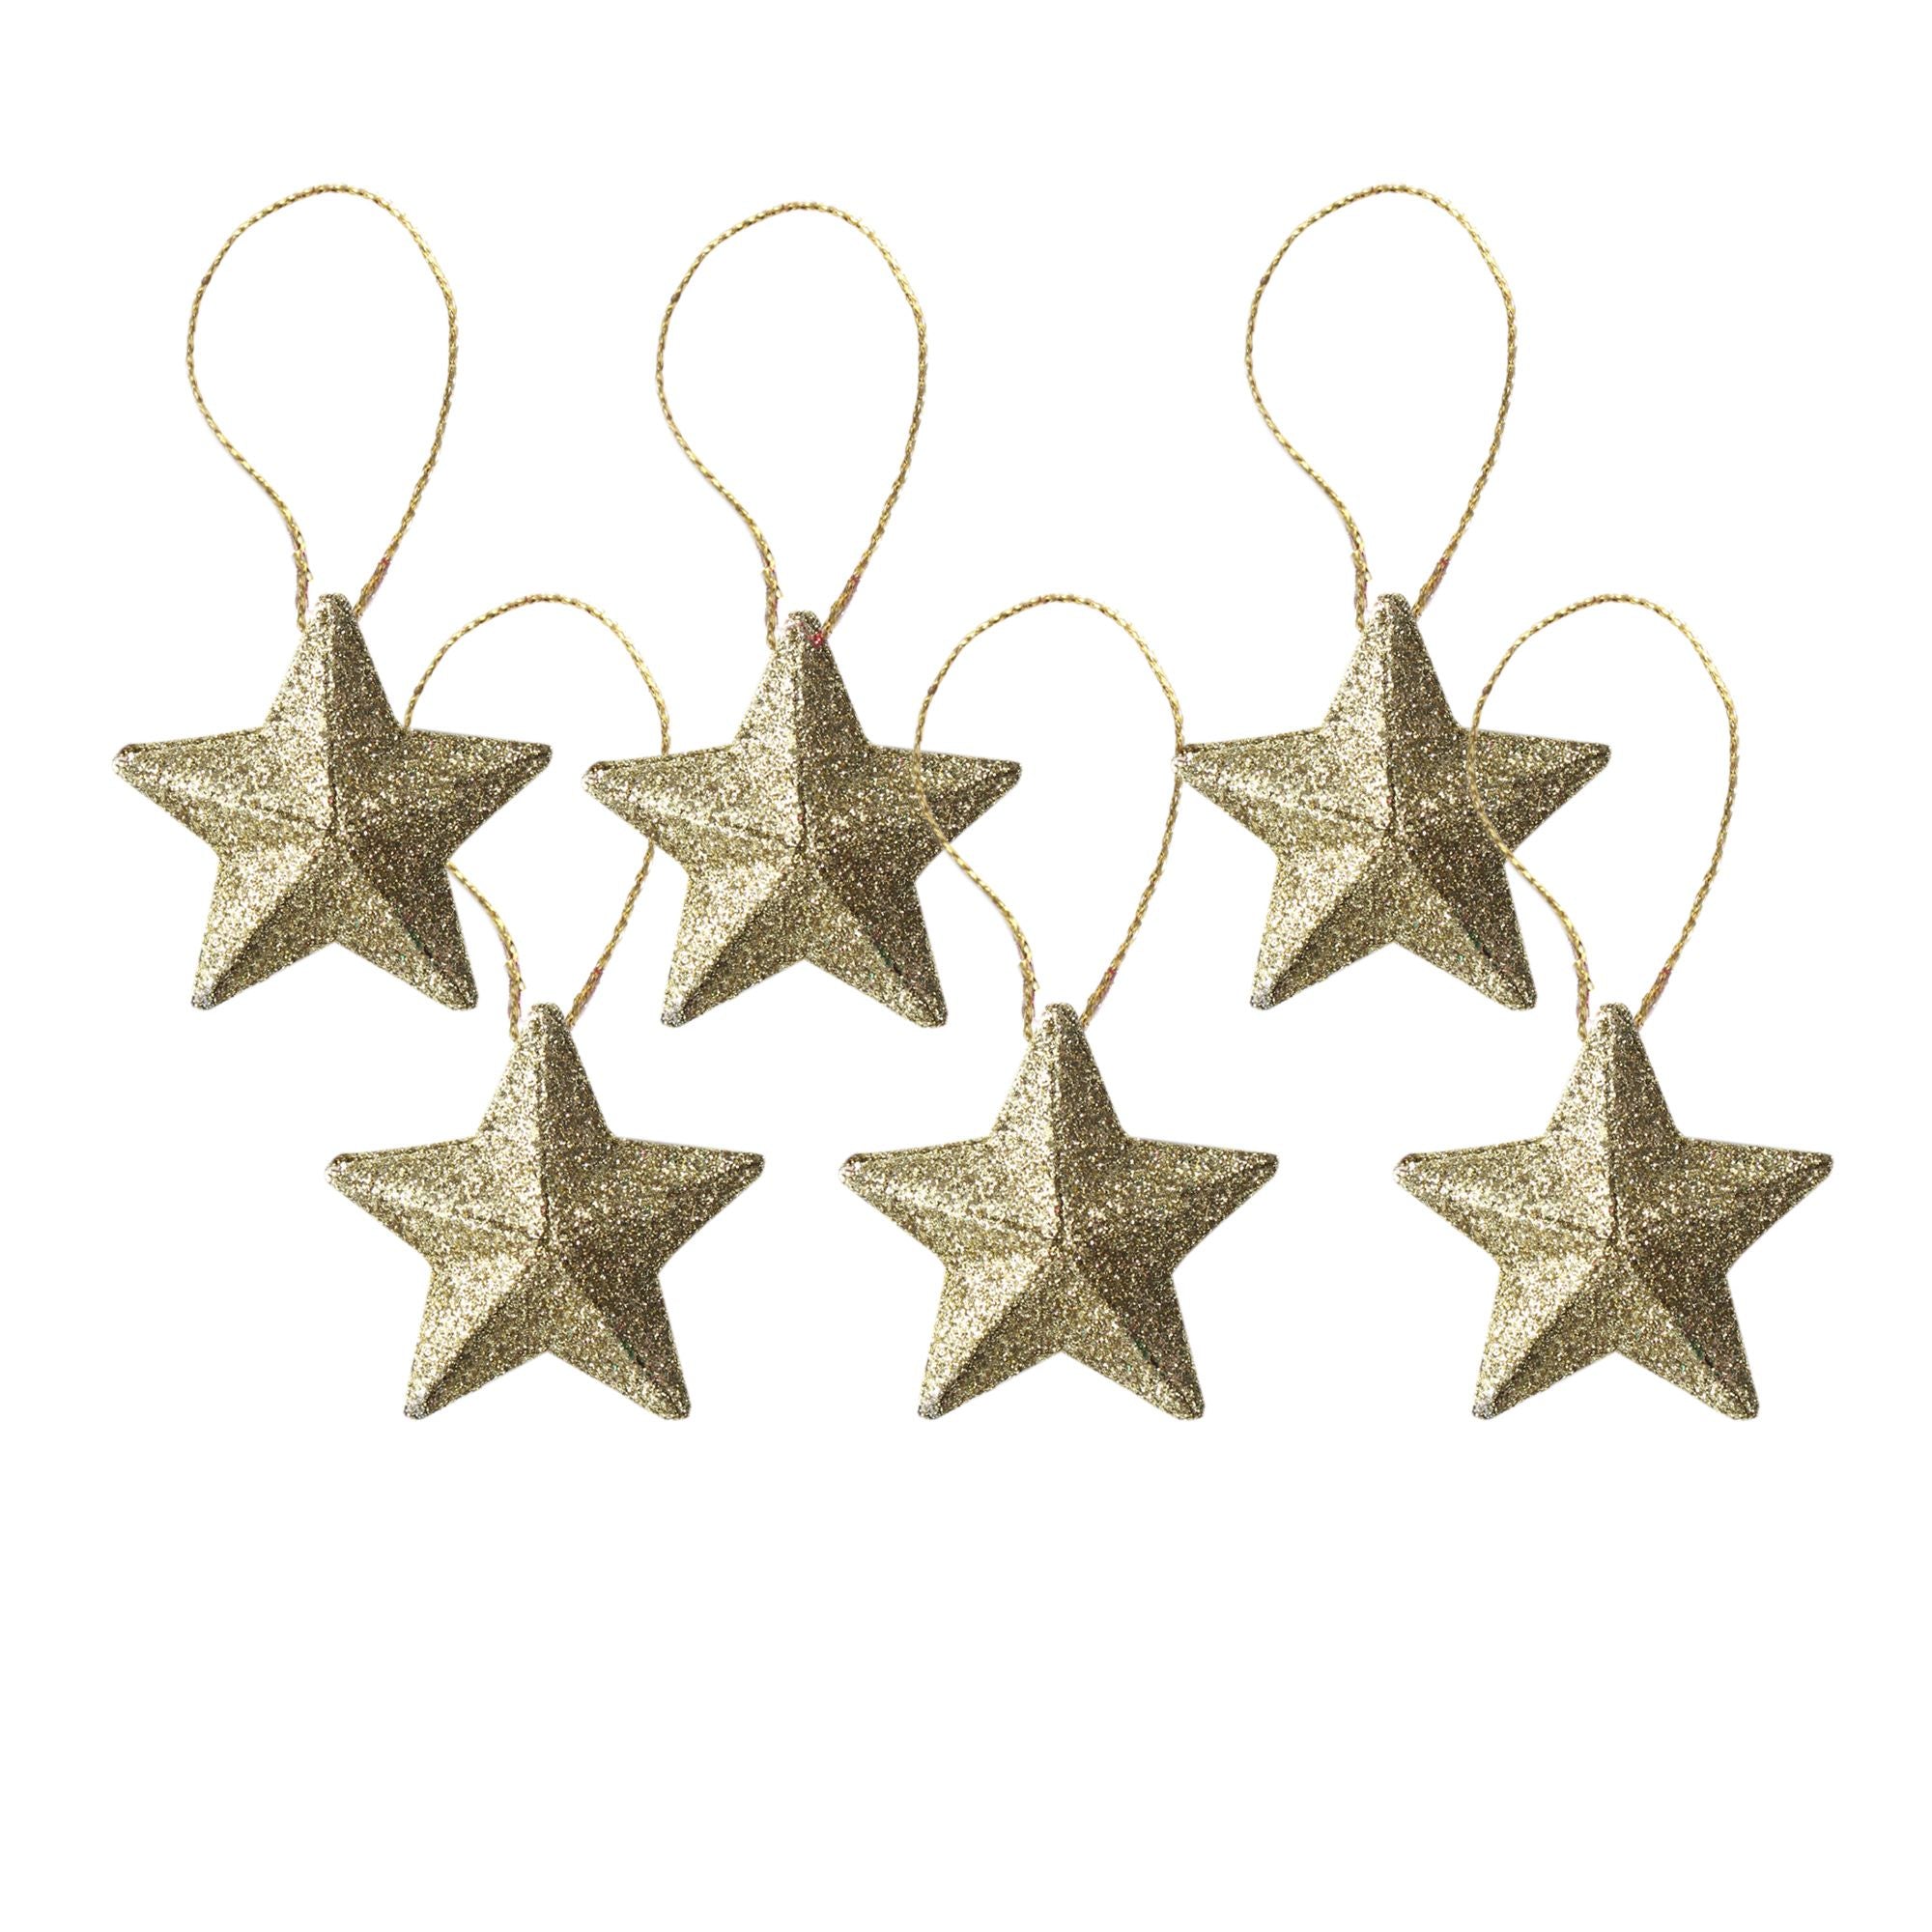 Handmade Christmas Ornaments - 3D Glitter Stars, 2.5inch, Gold, 6pc